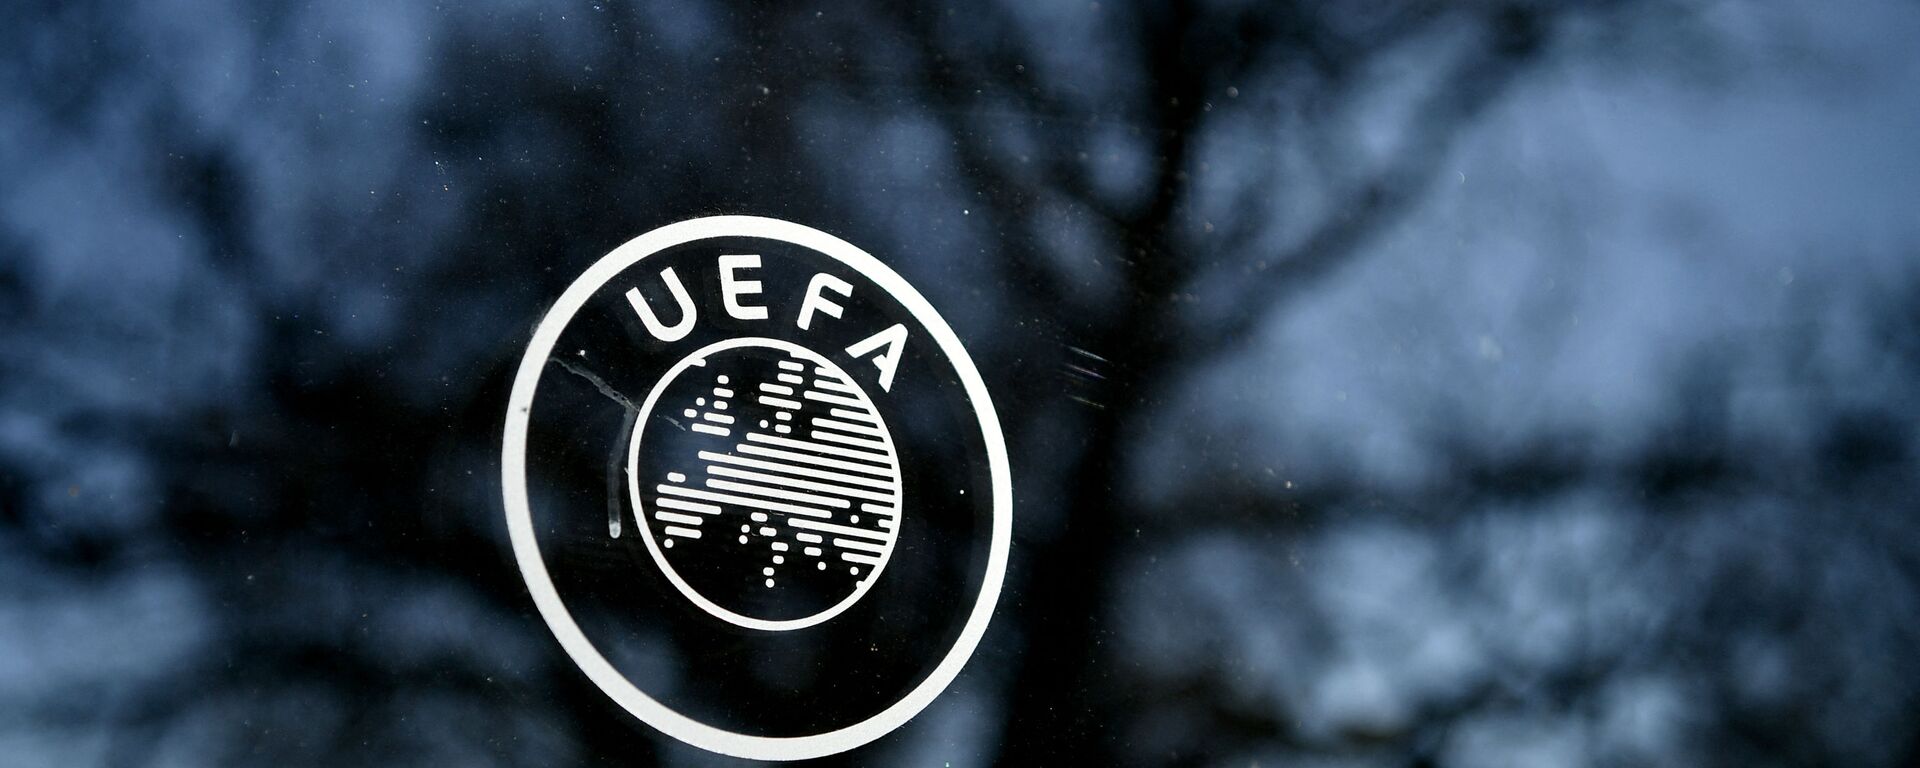 Логотип УЕФА, архивное фото - Sputnik Беларусь, 1920, 07.05.2021